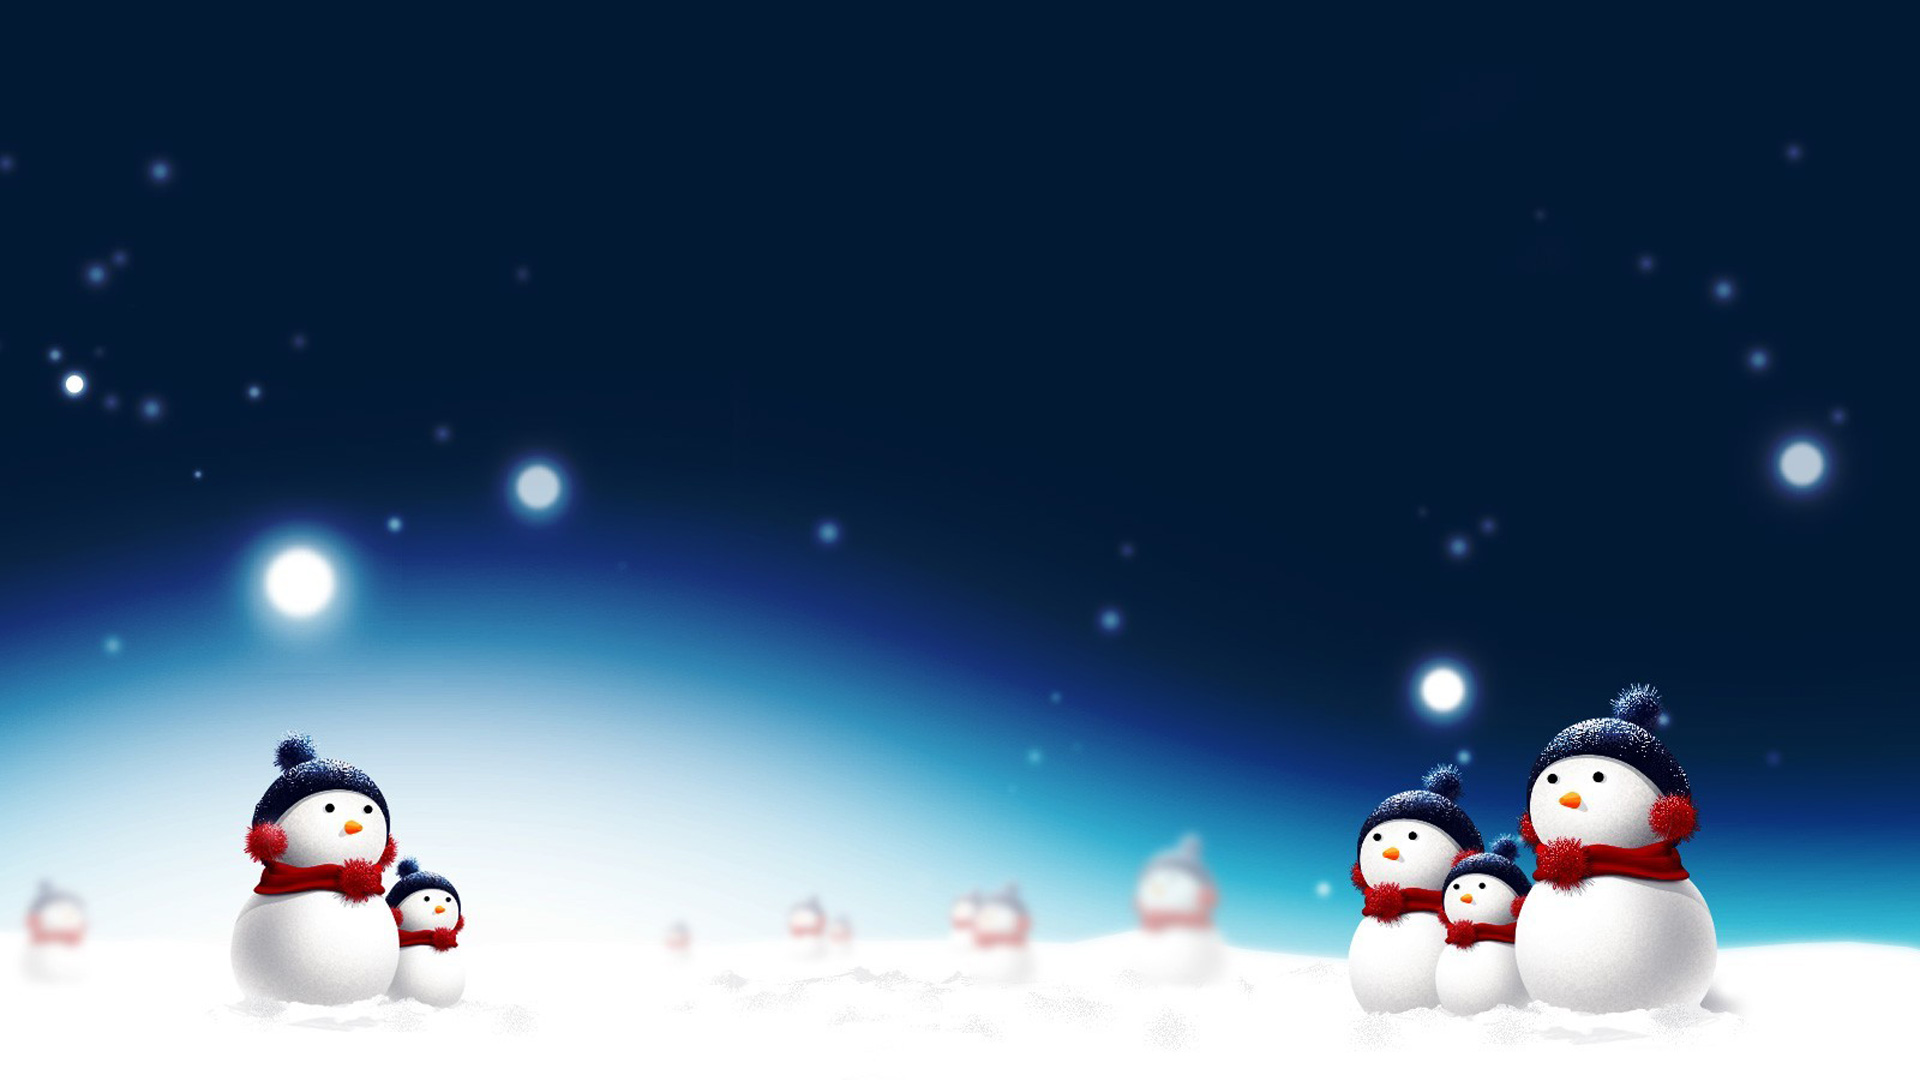 Snowman In Christmas Night   1920x1080   169